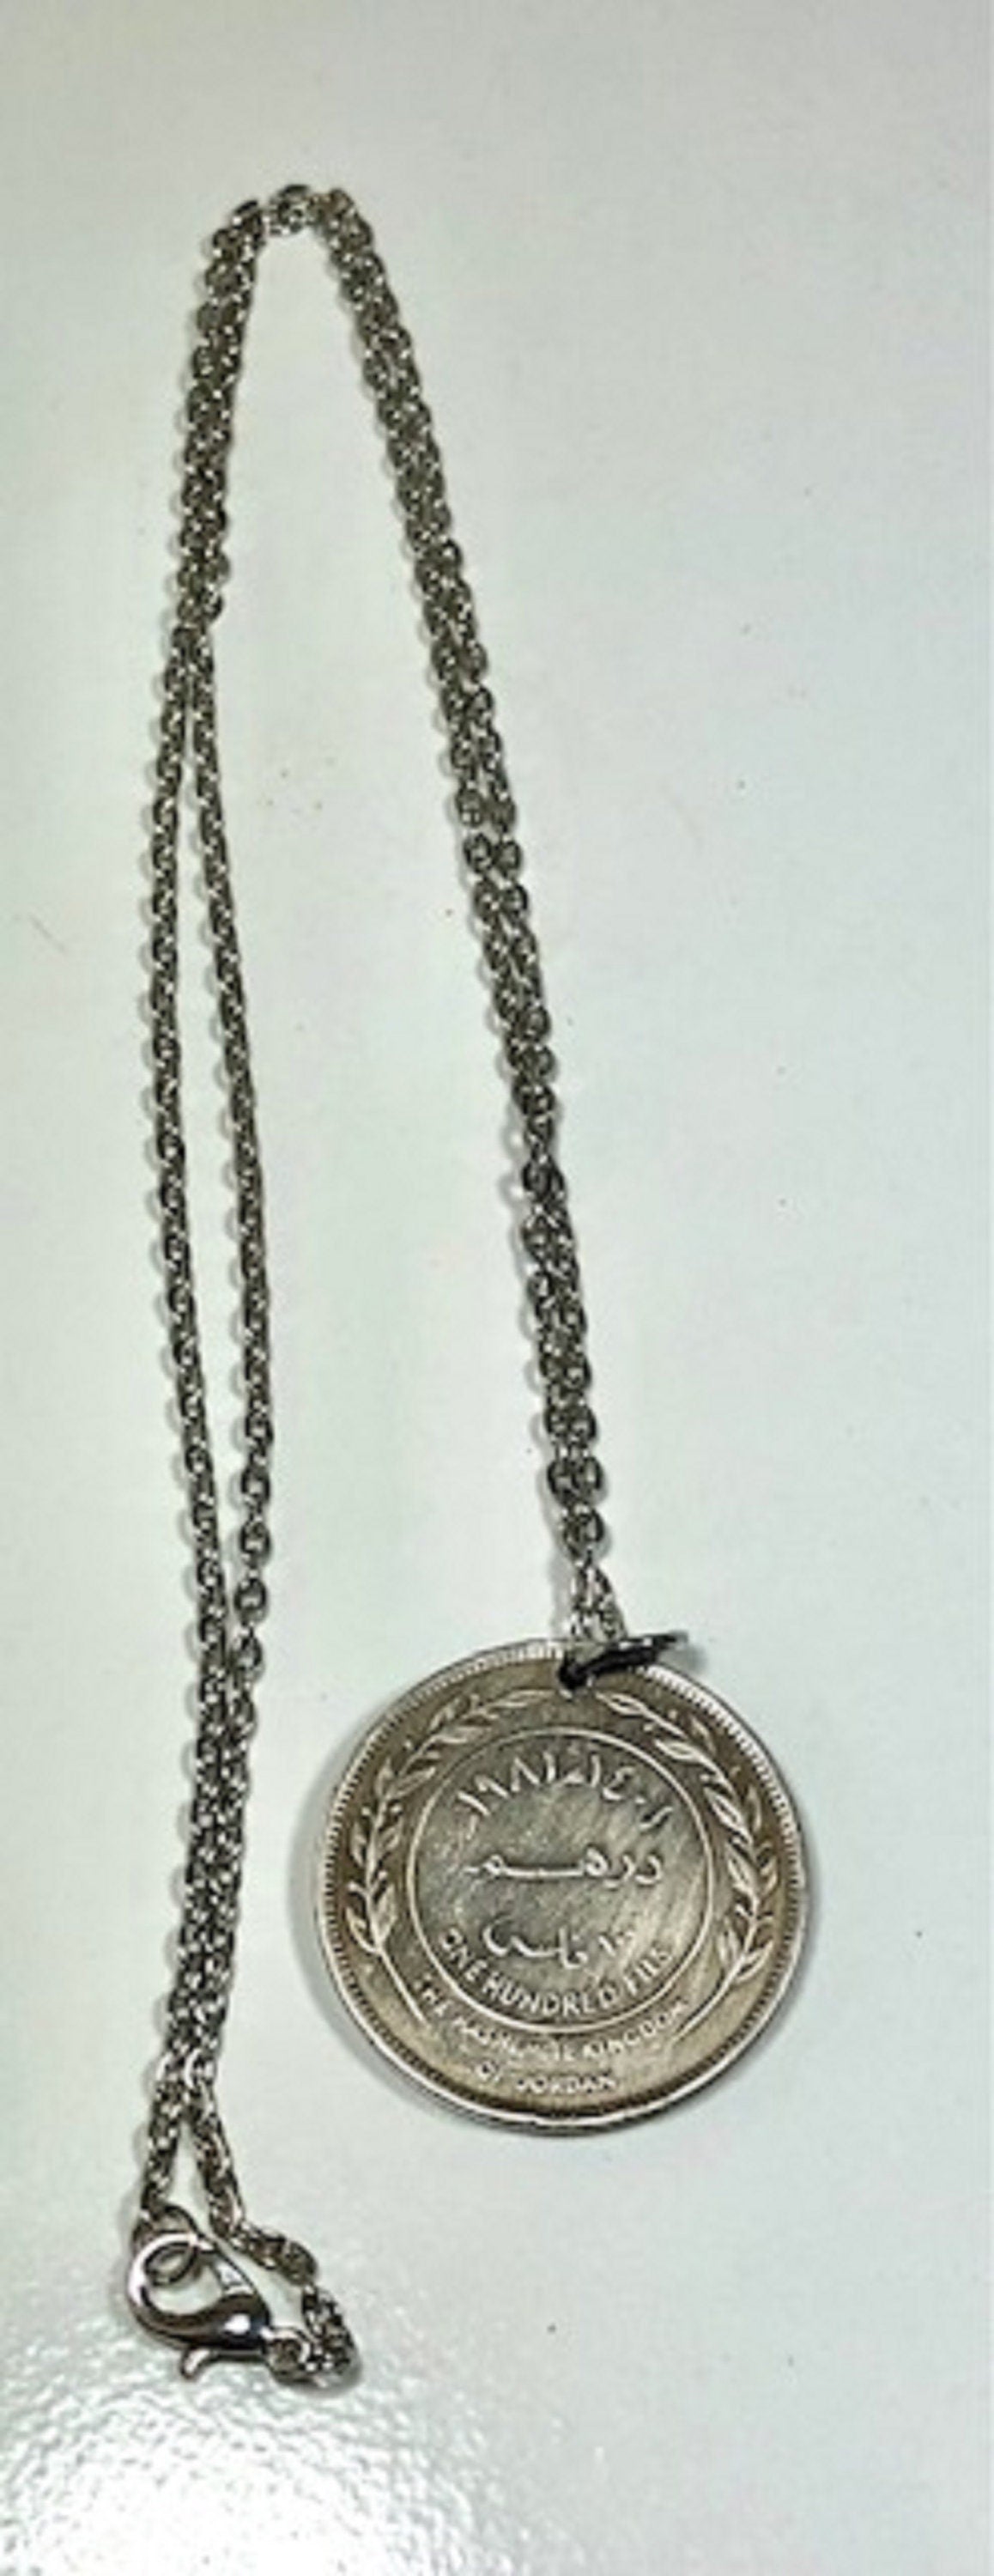 Jordan Coin Necklace 100 Fils Coin Pendant Necklace Jordanian Vintage Custom Made Rare coins - Coin Enthusiast - Fashion Accessory Handmade